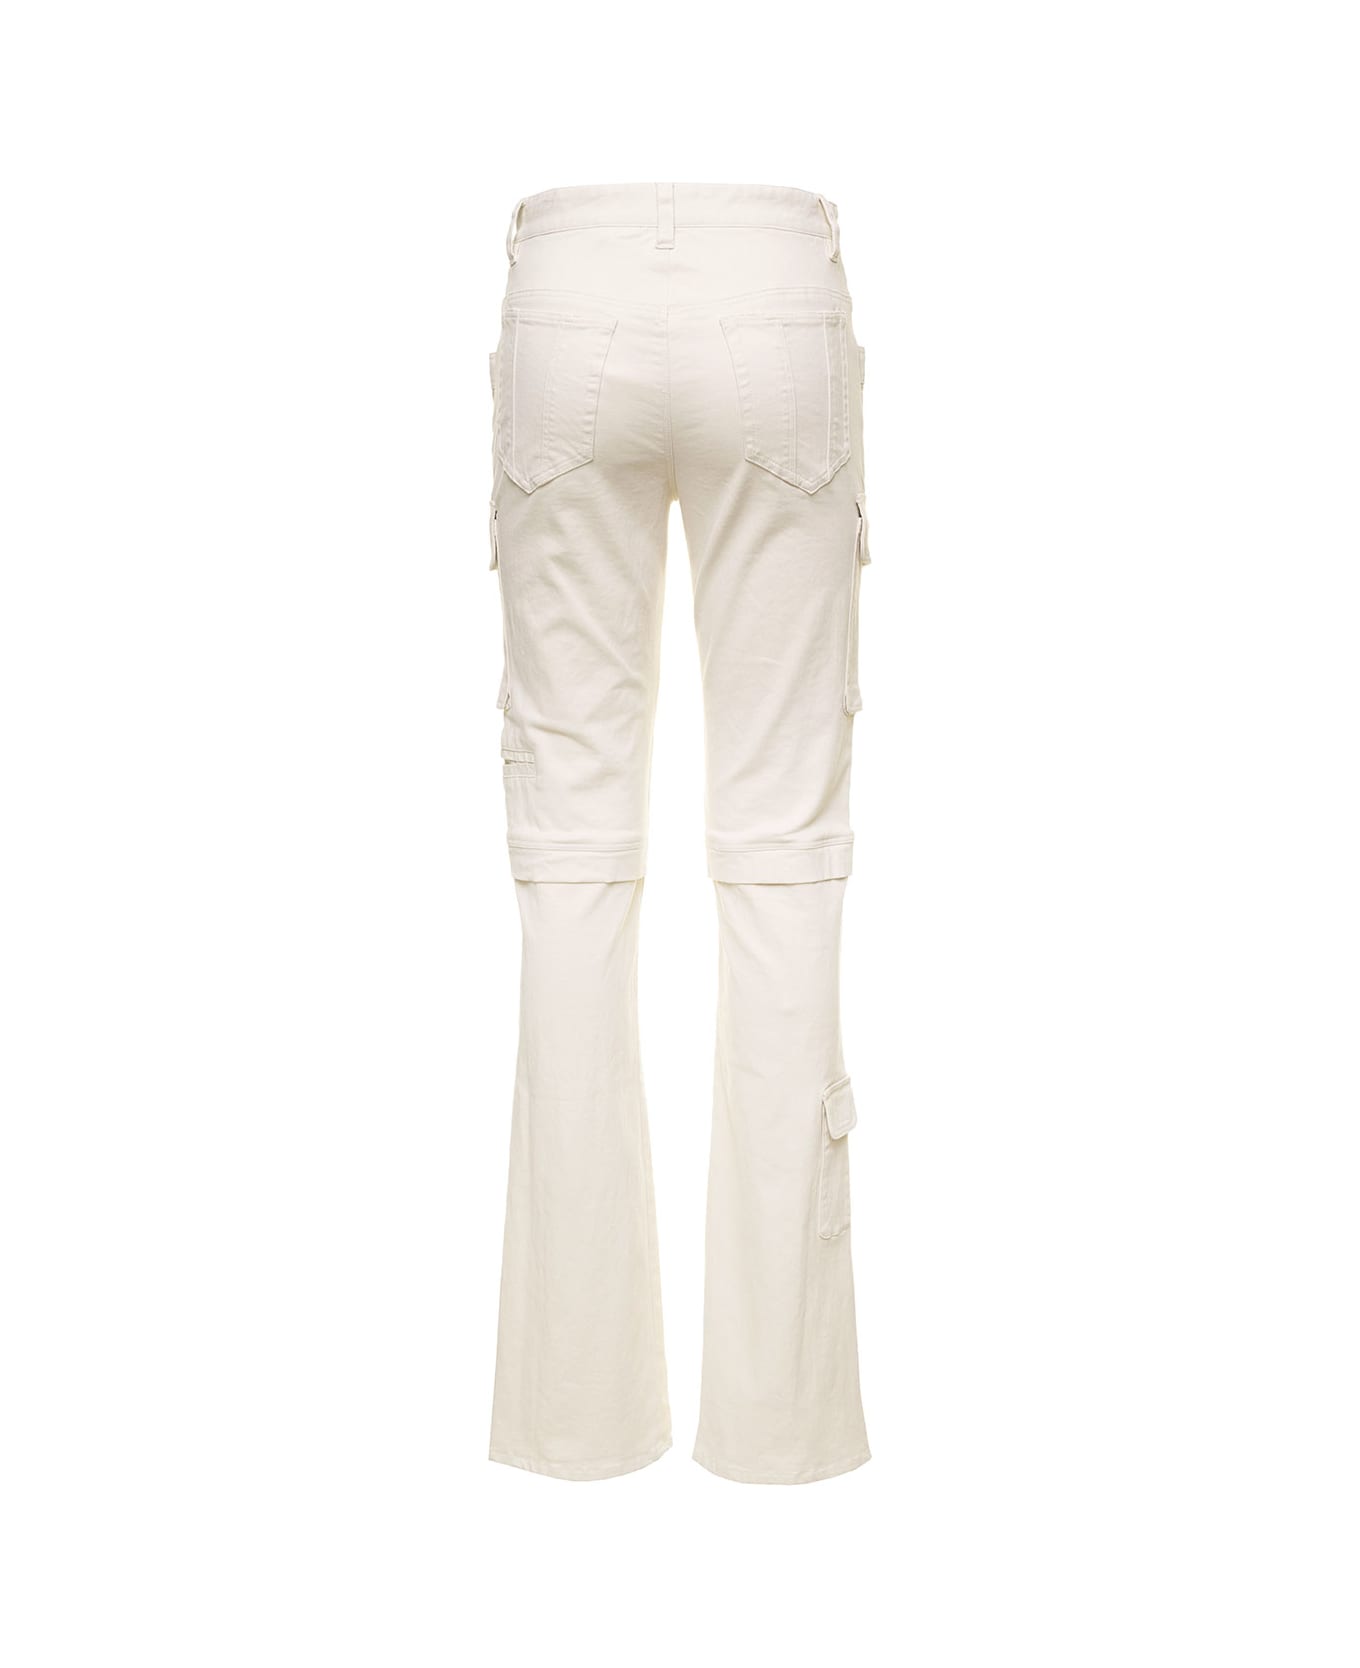 Isabel Marant Sivokayo Stretch Cotton Pants - White